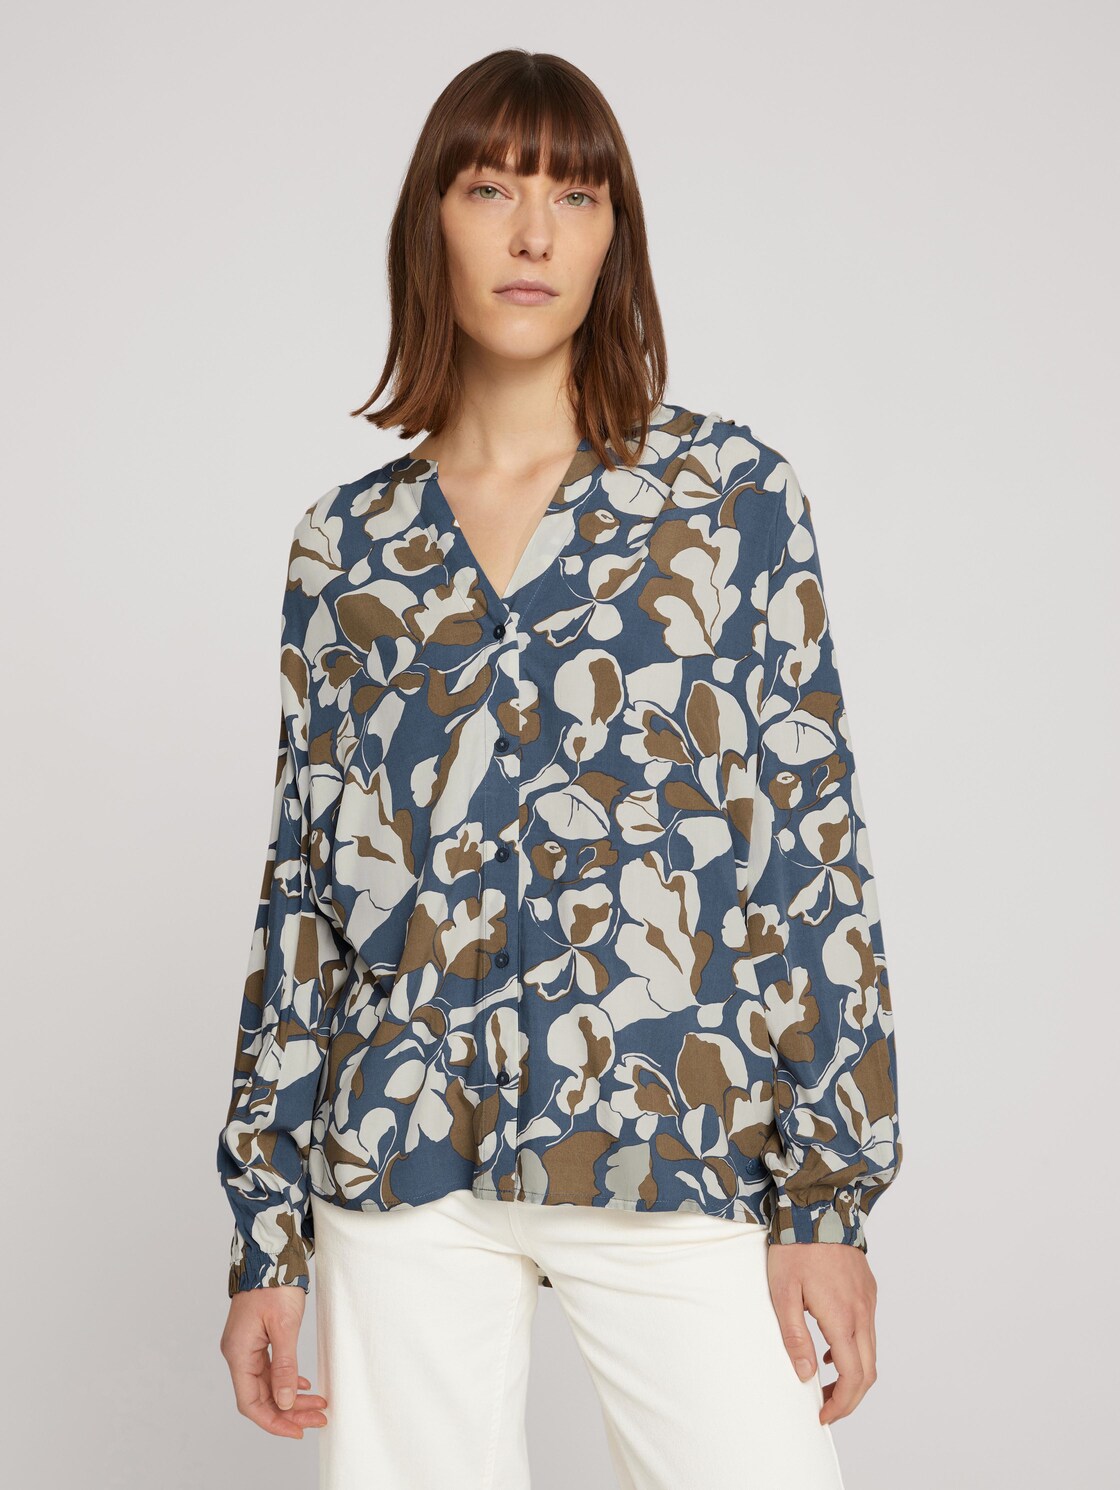 TOM TAILOR Gedessineerde blouse met LENZING(TM) ECOVERO(TM), blue sepia floral design, 44